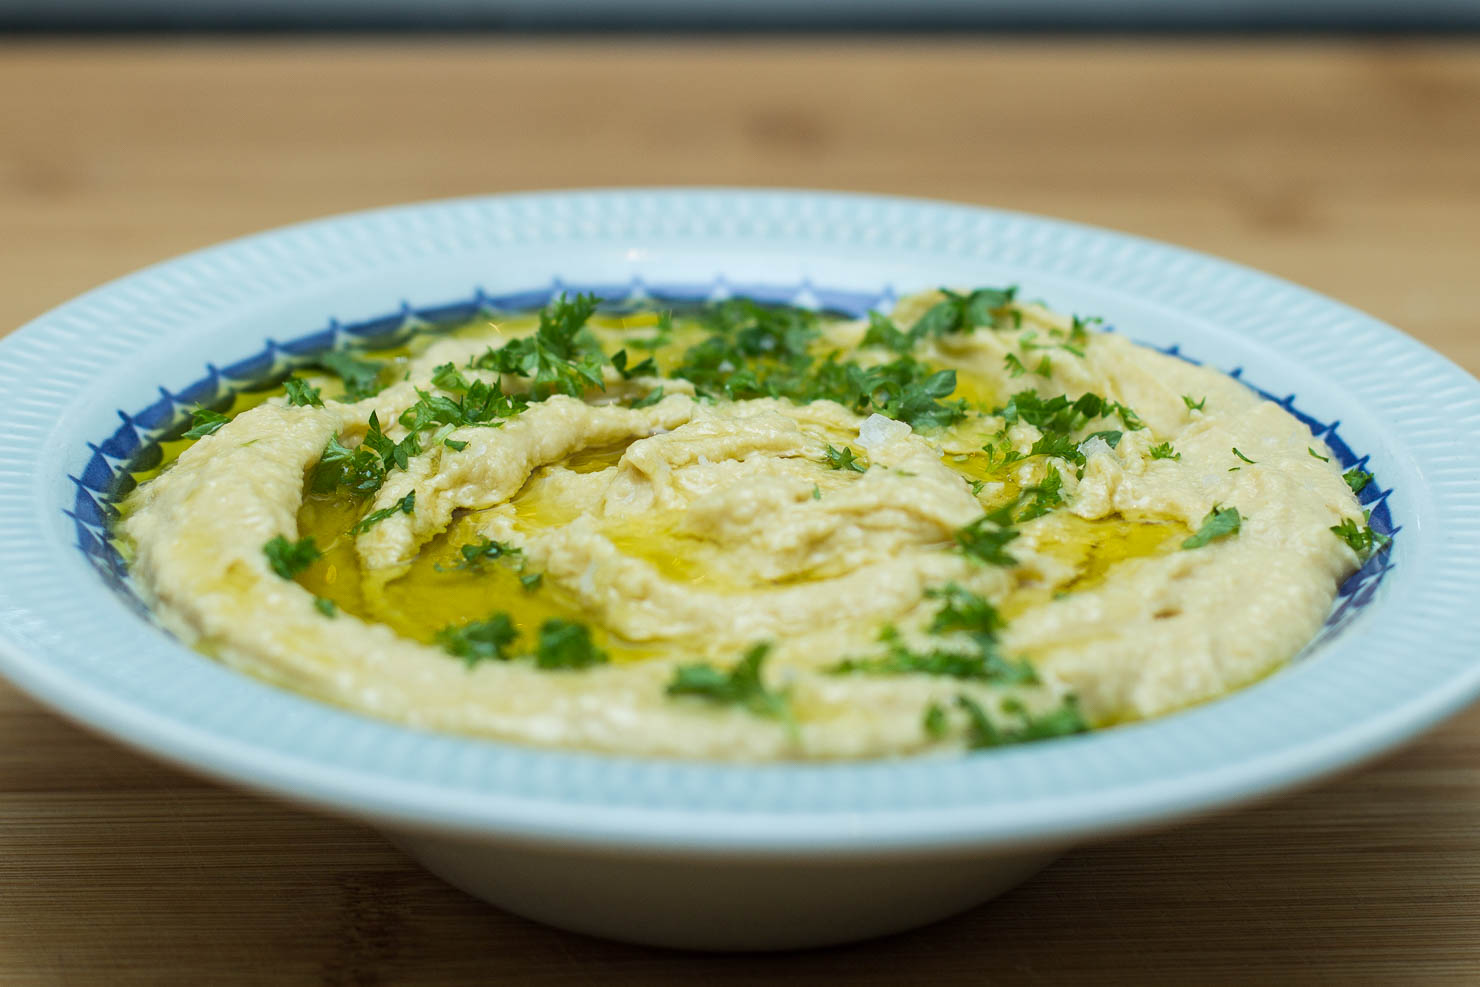 Hummus | Maqluba "opp ned" kylling | #CookForSYRIA